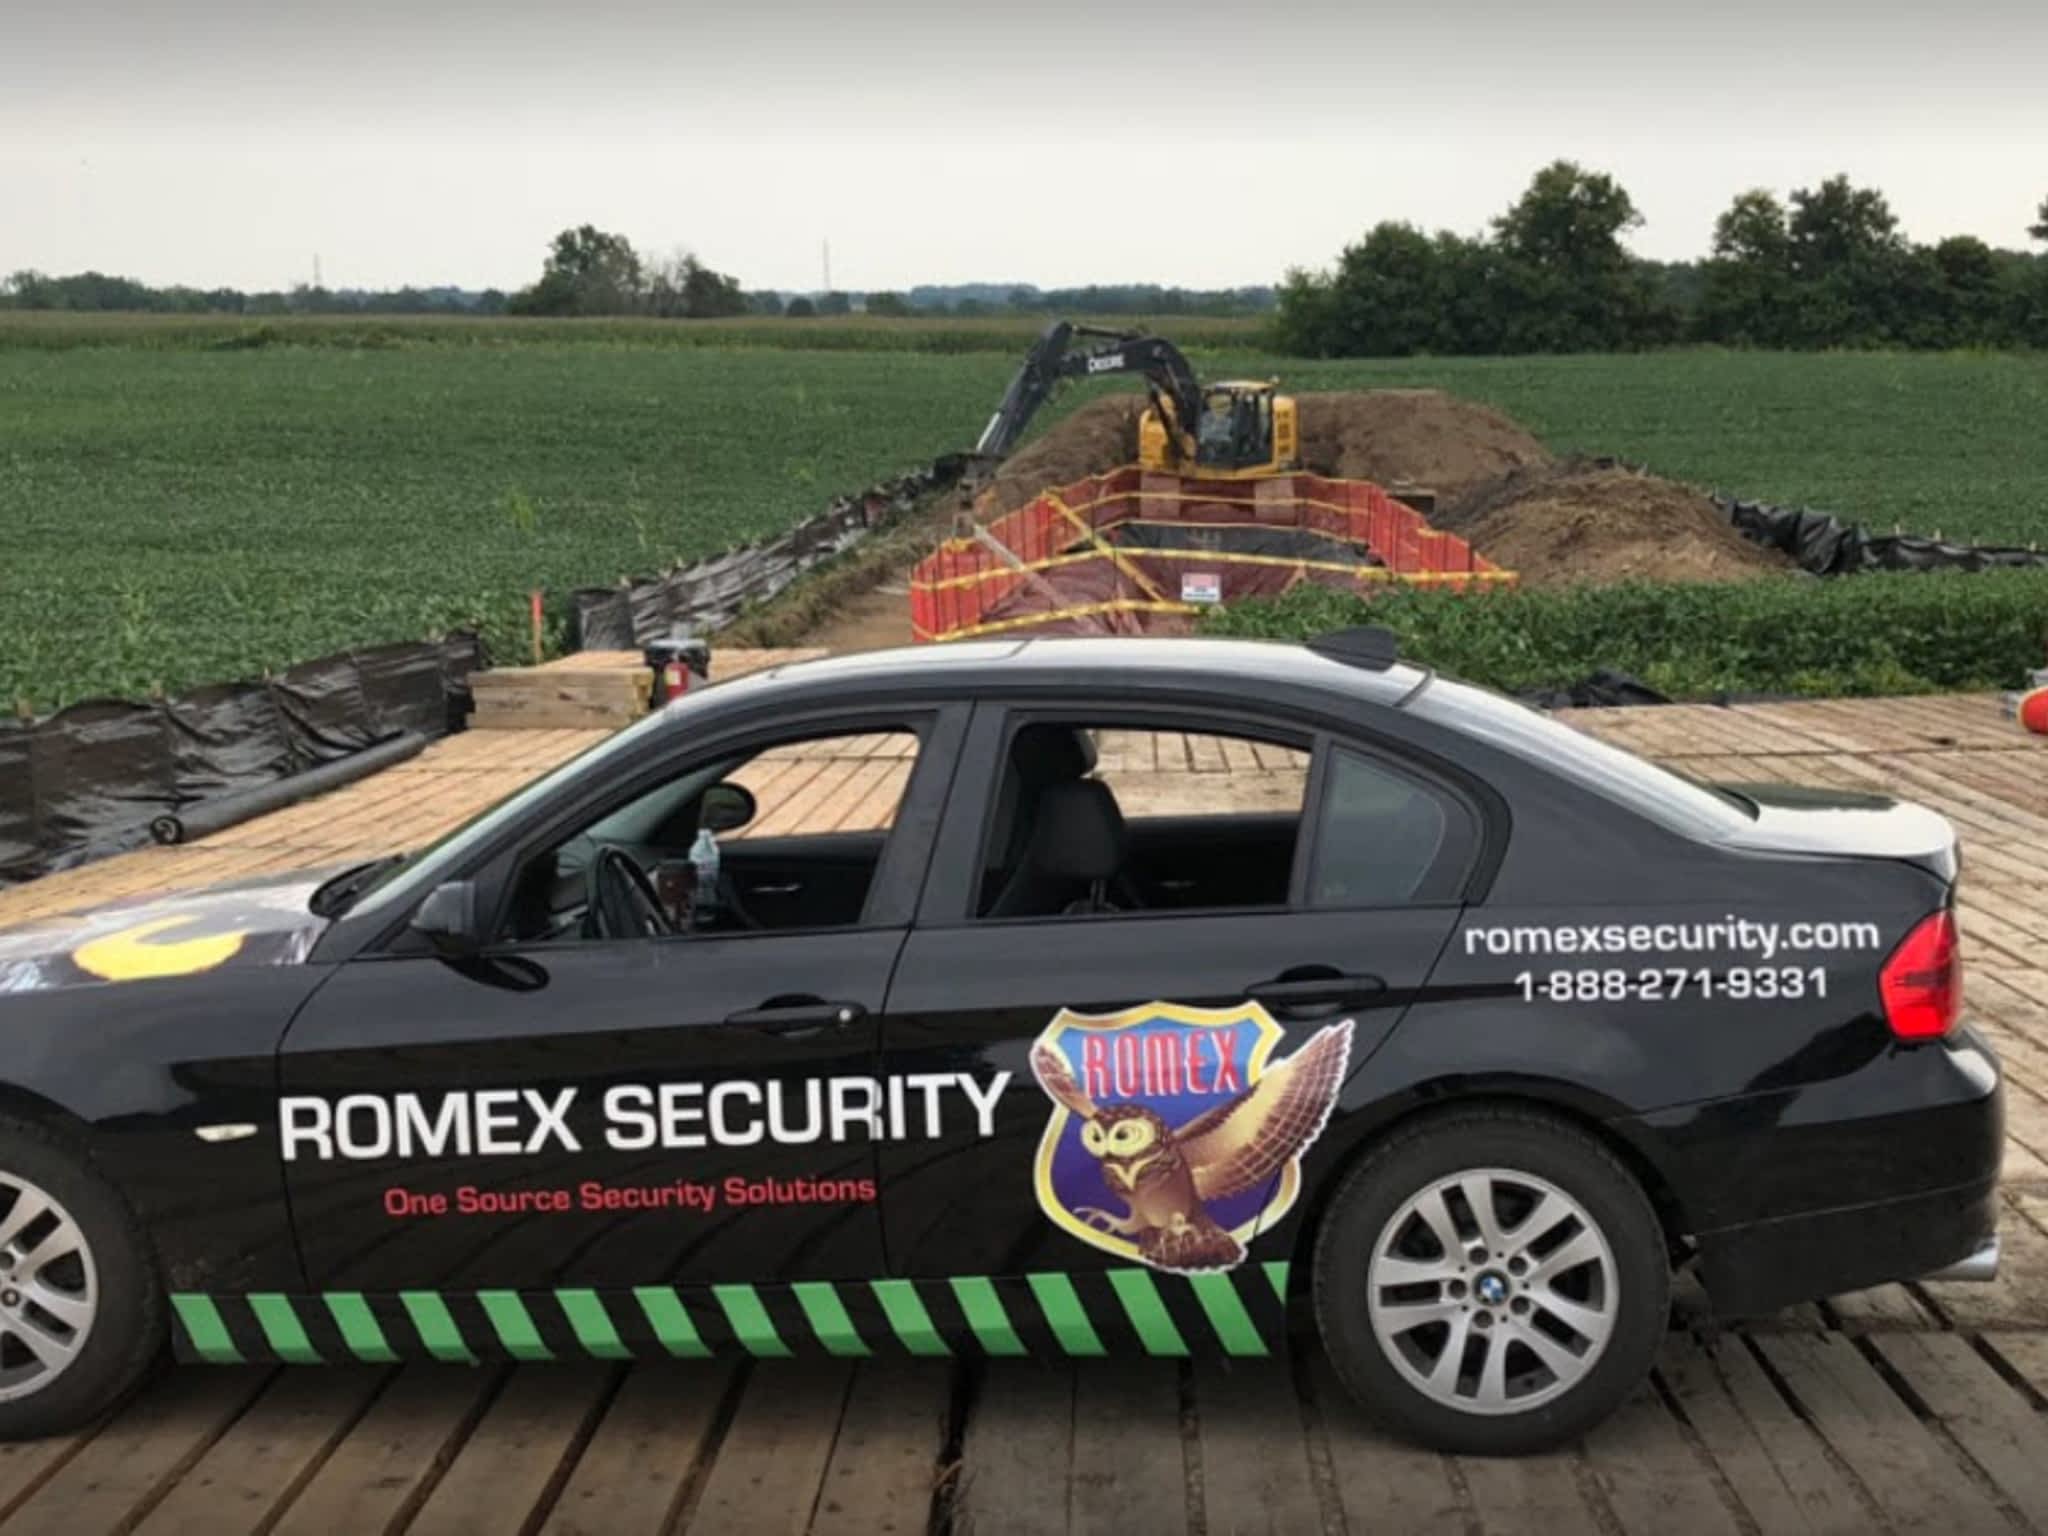 photo Romex Security Inc.